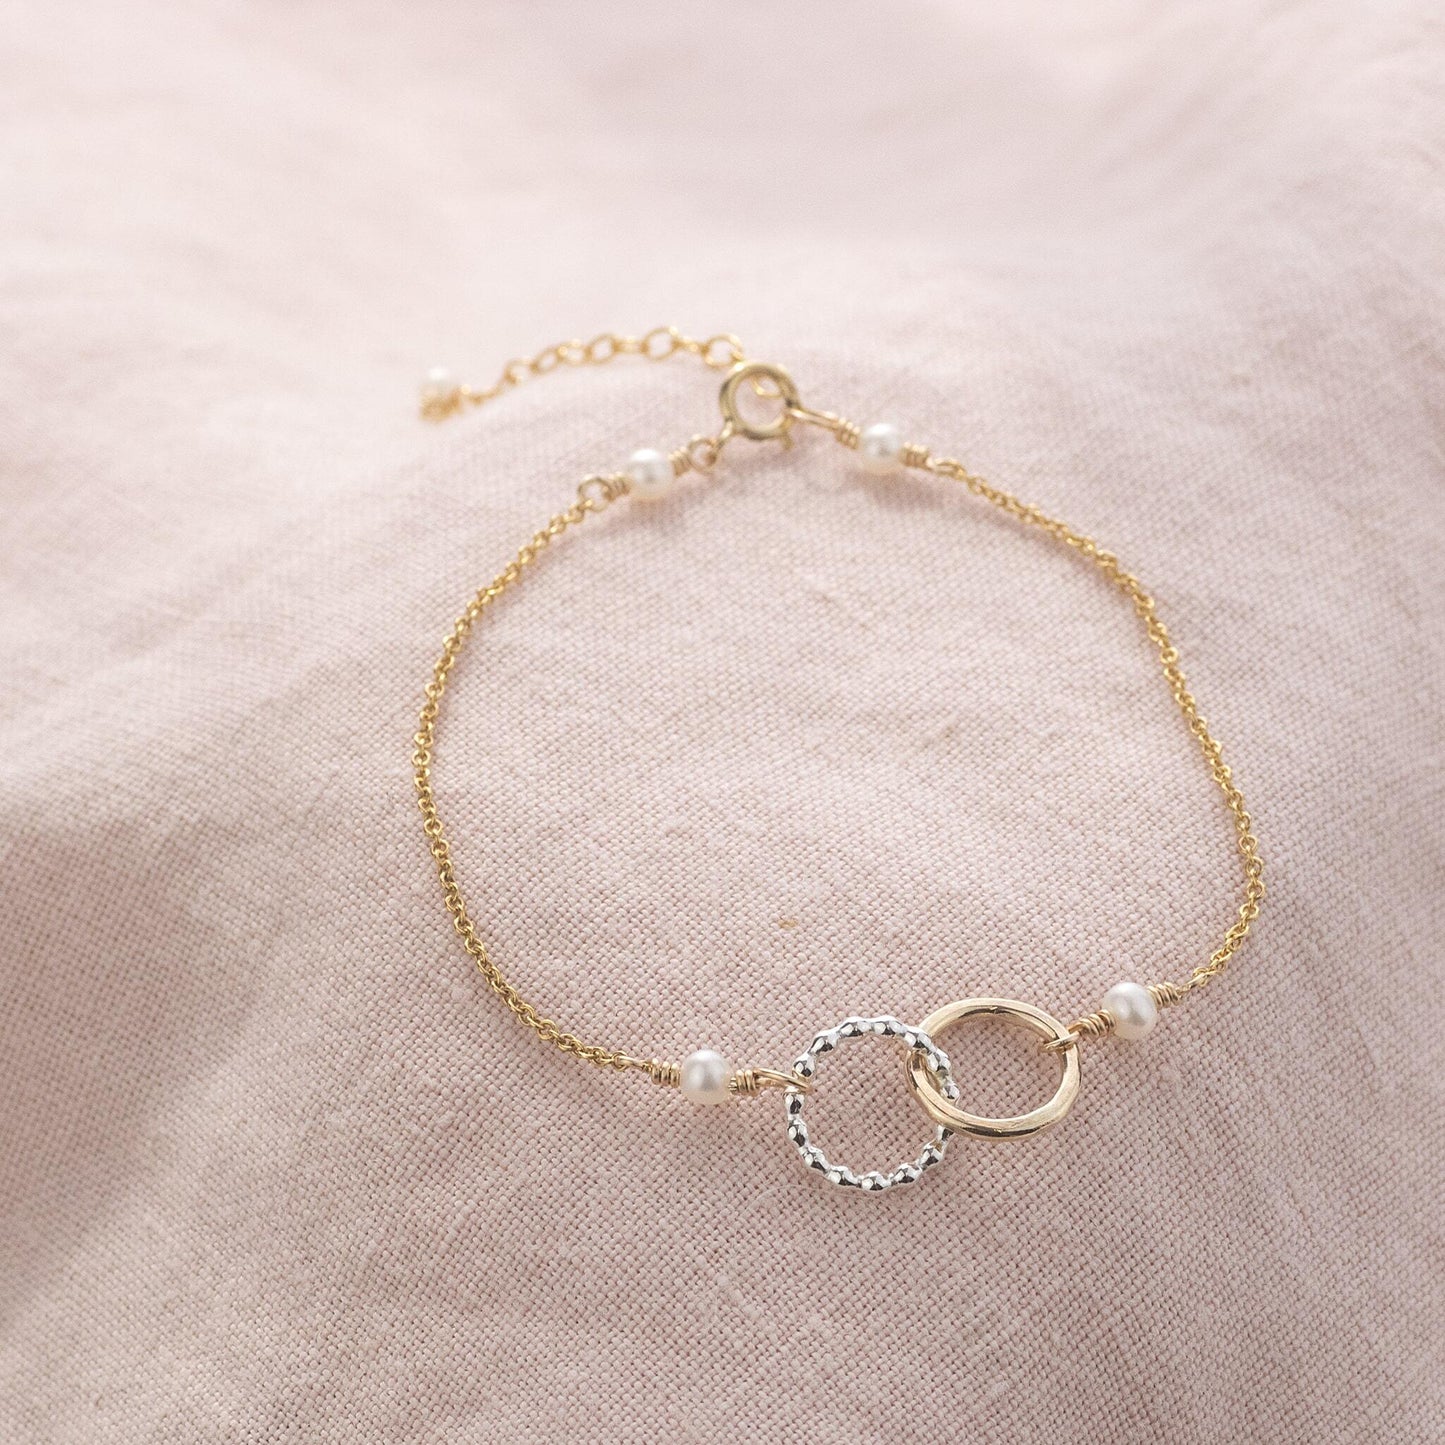 Love Link Pearl Bracelet - Linked for a Lifetime - Silver & Gold